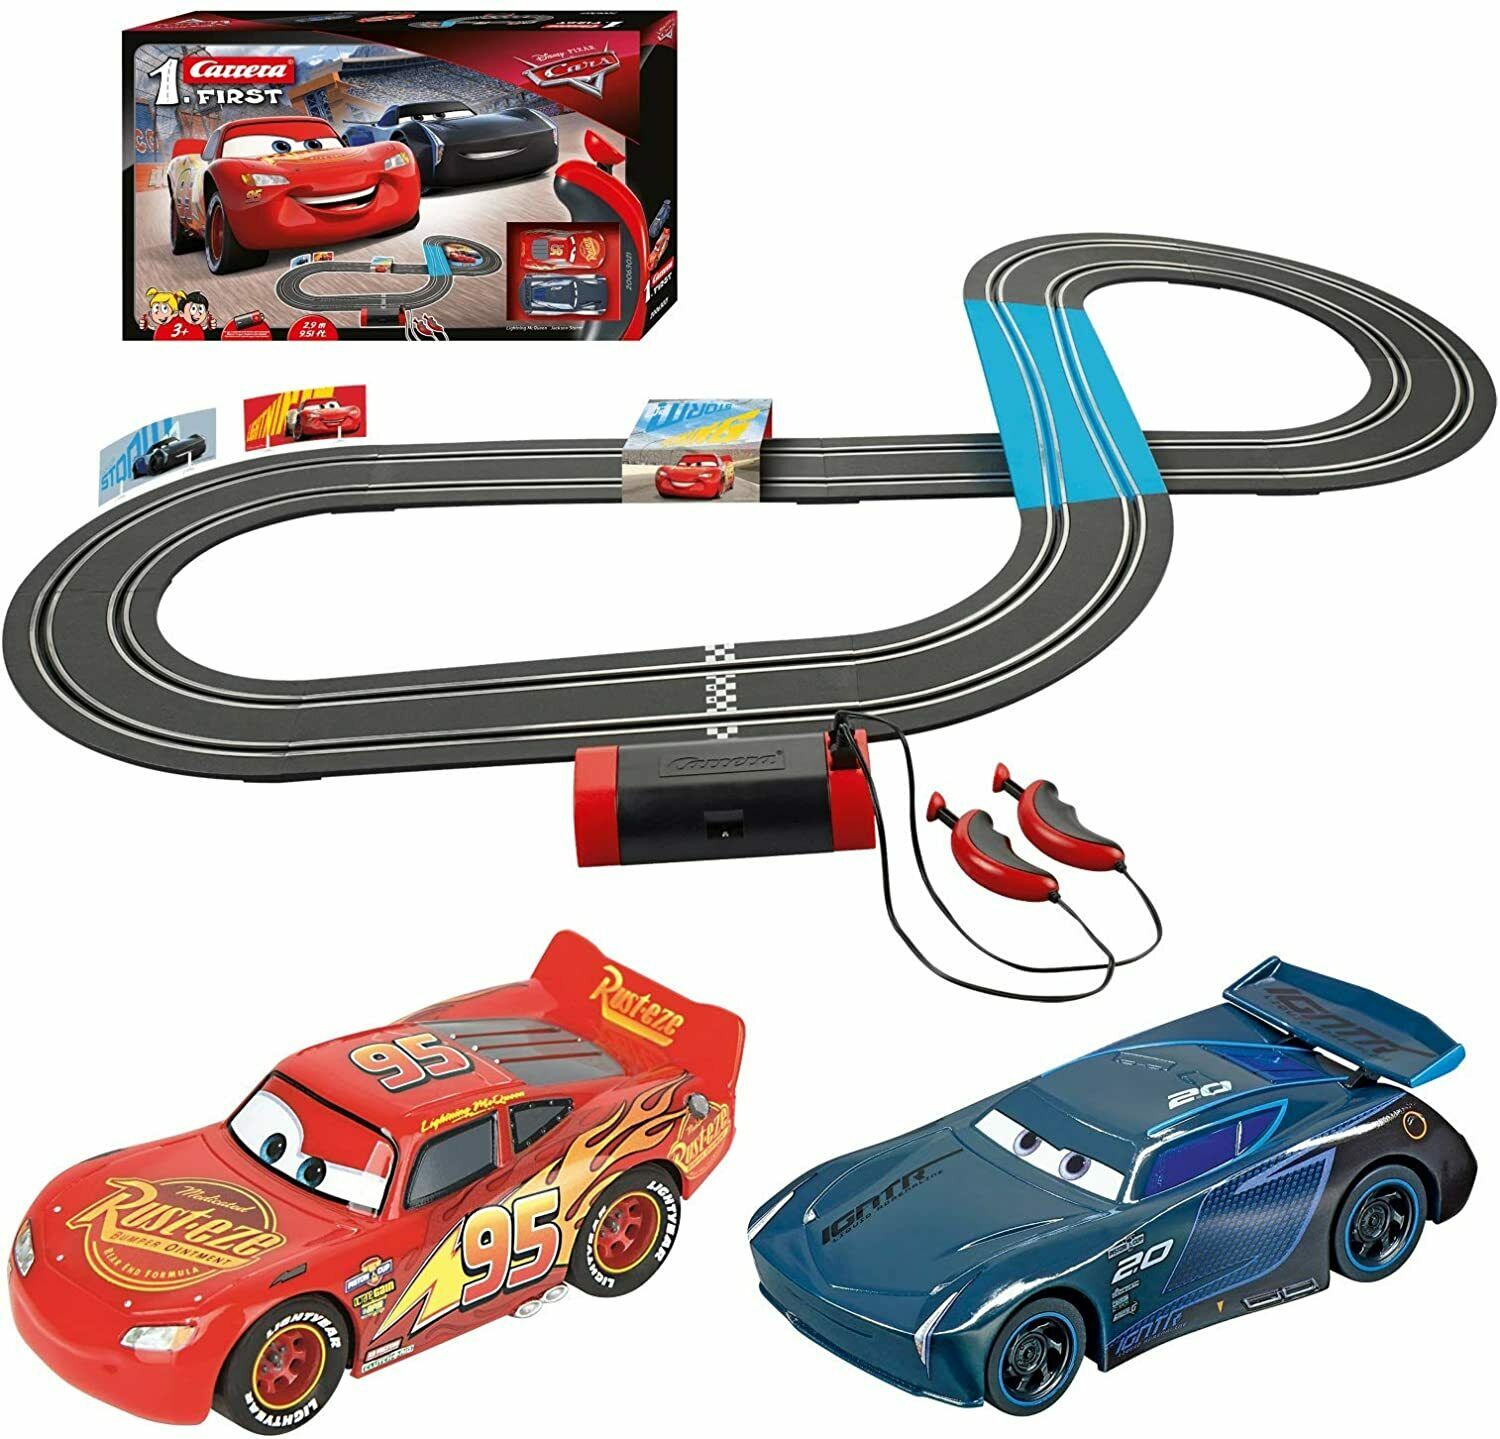 Carrera First Disney/Pixar Cars 3 - Slot Car Race Track - Includes 2 Cars:  Light